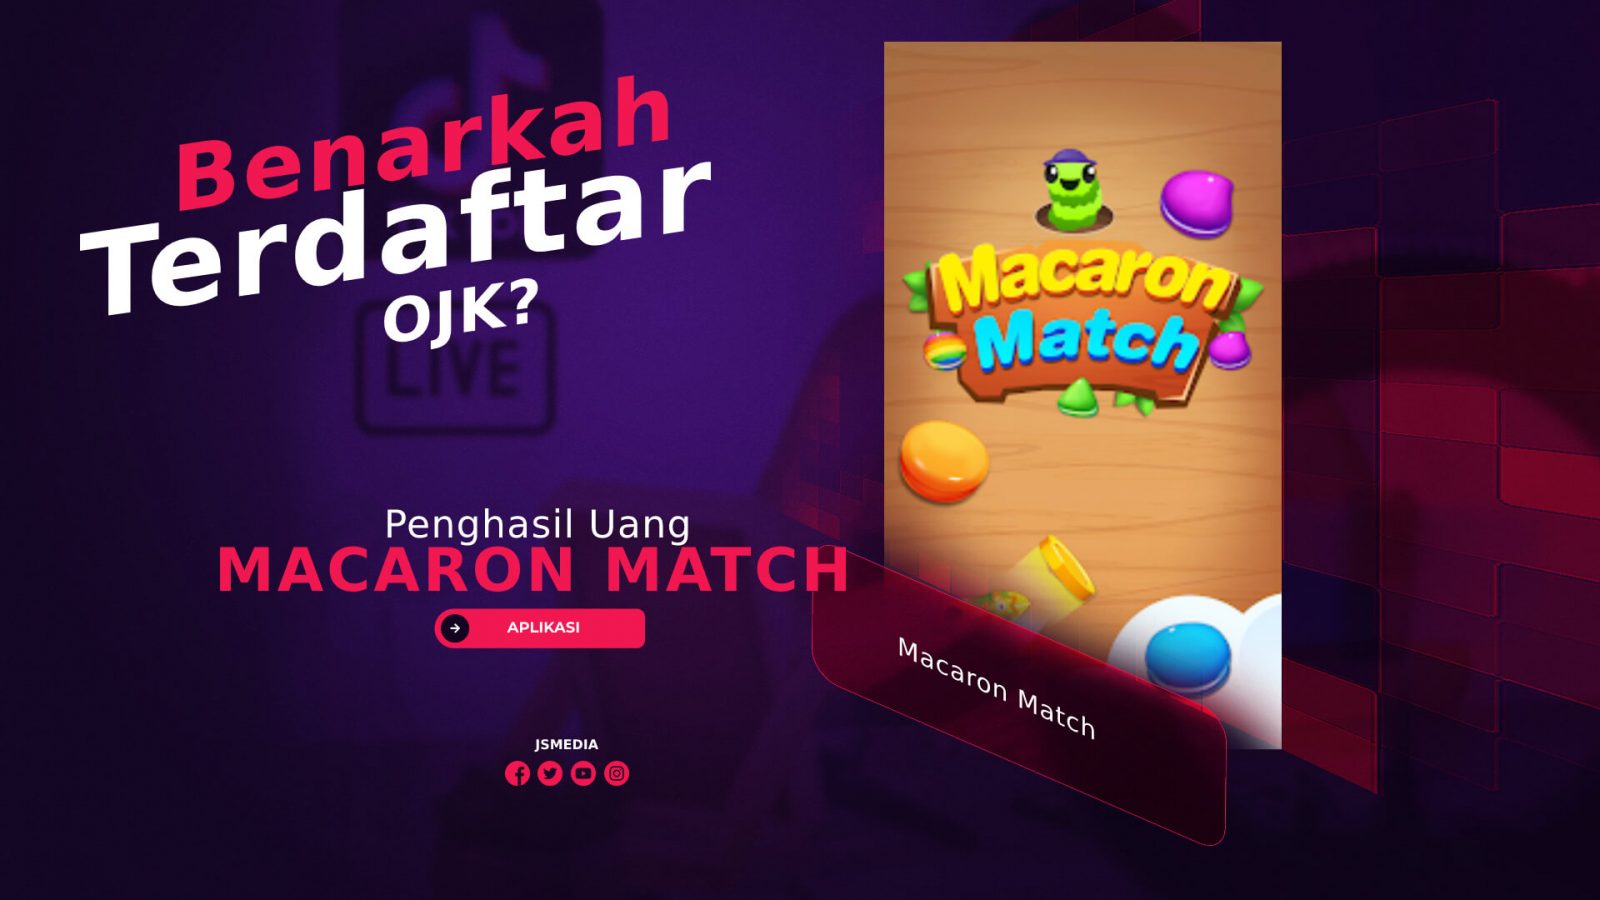 Macaron Match Penghasil Uang, Terdaftar OJK?